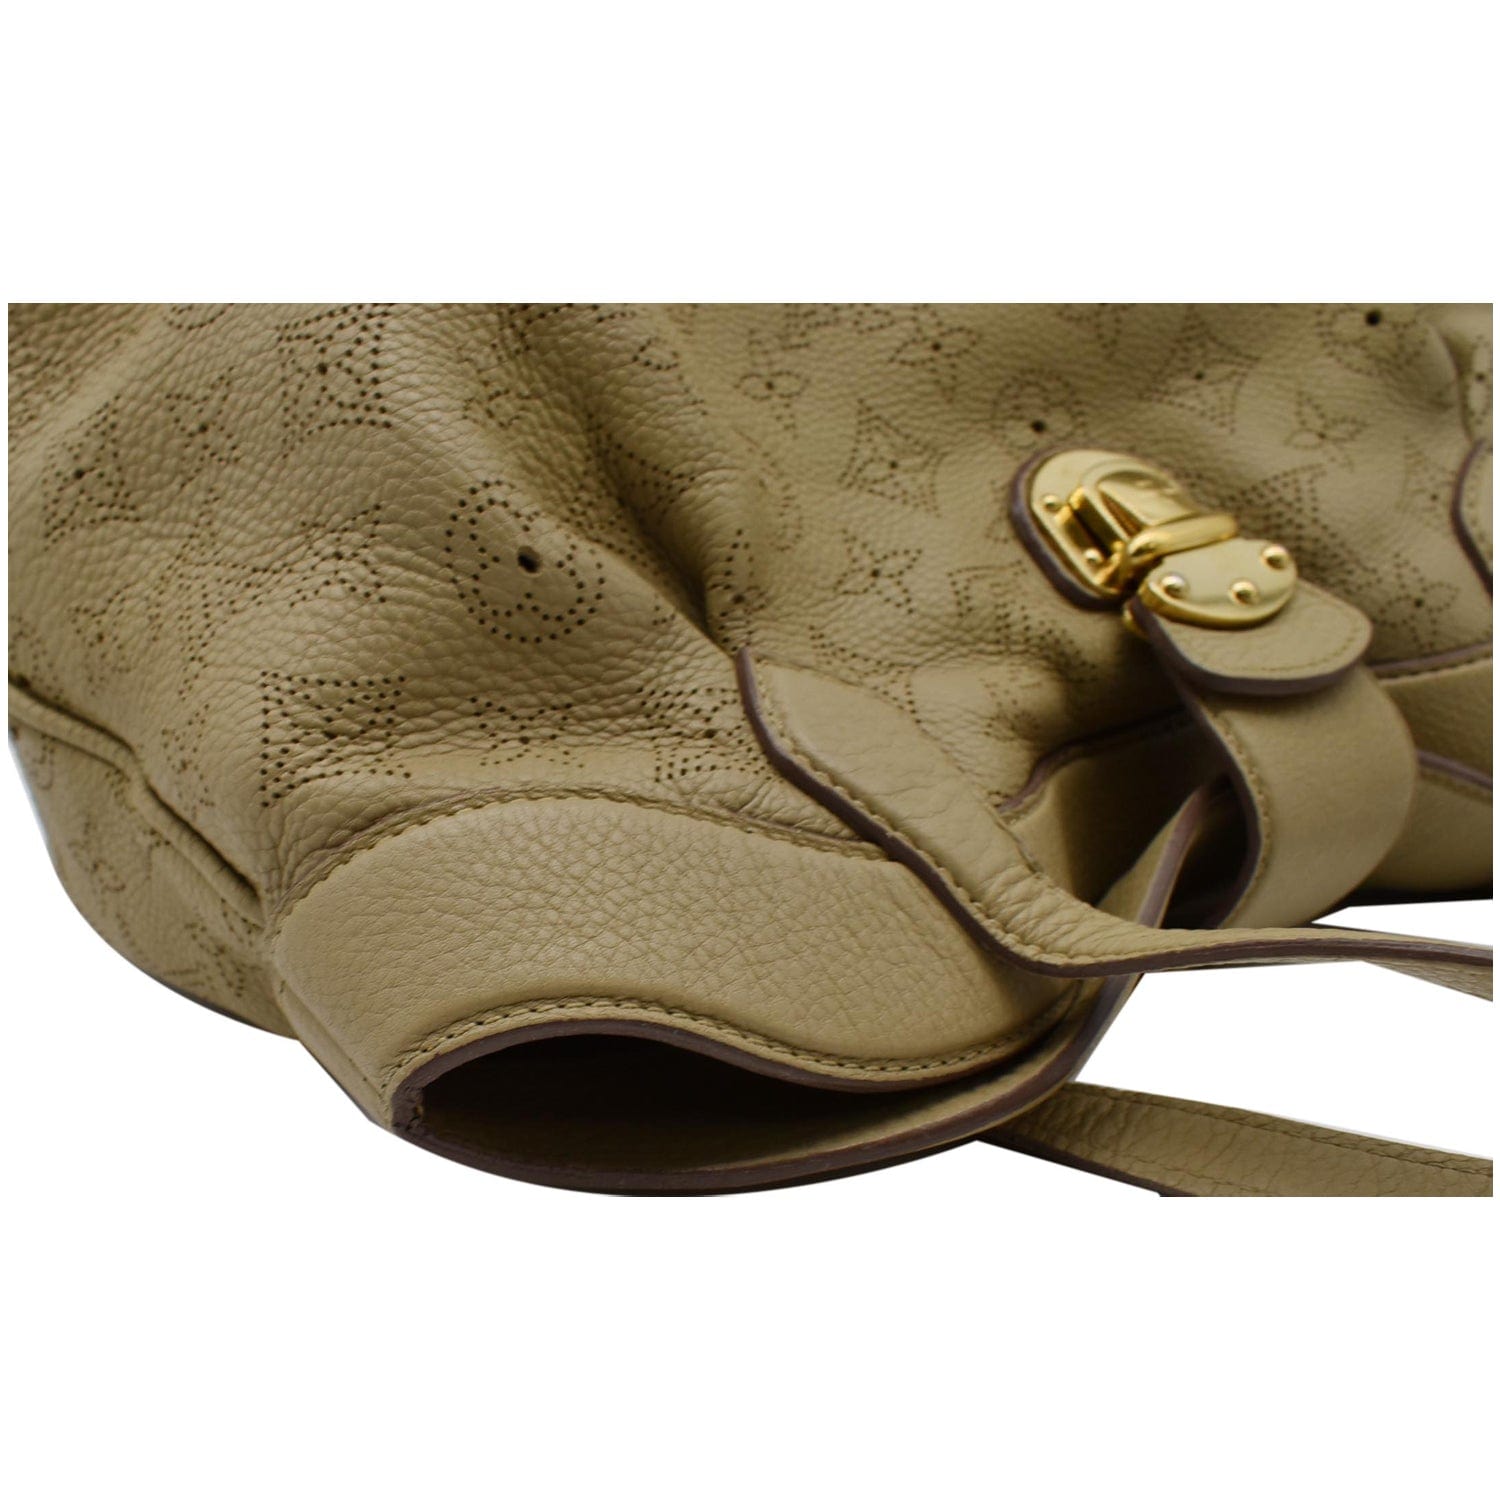 Vuitton - Boston - M41524 – dct - Bag - LOUIS VUITTON Cirrus PM Mahina  Leather Hobo Bag Beige - Speedy - ep_vintage luxury Store - Louis - Bag -  Monogram - Hand - 35